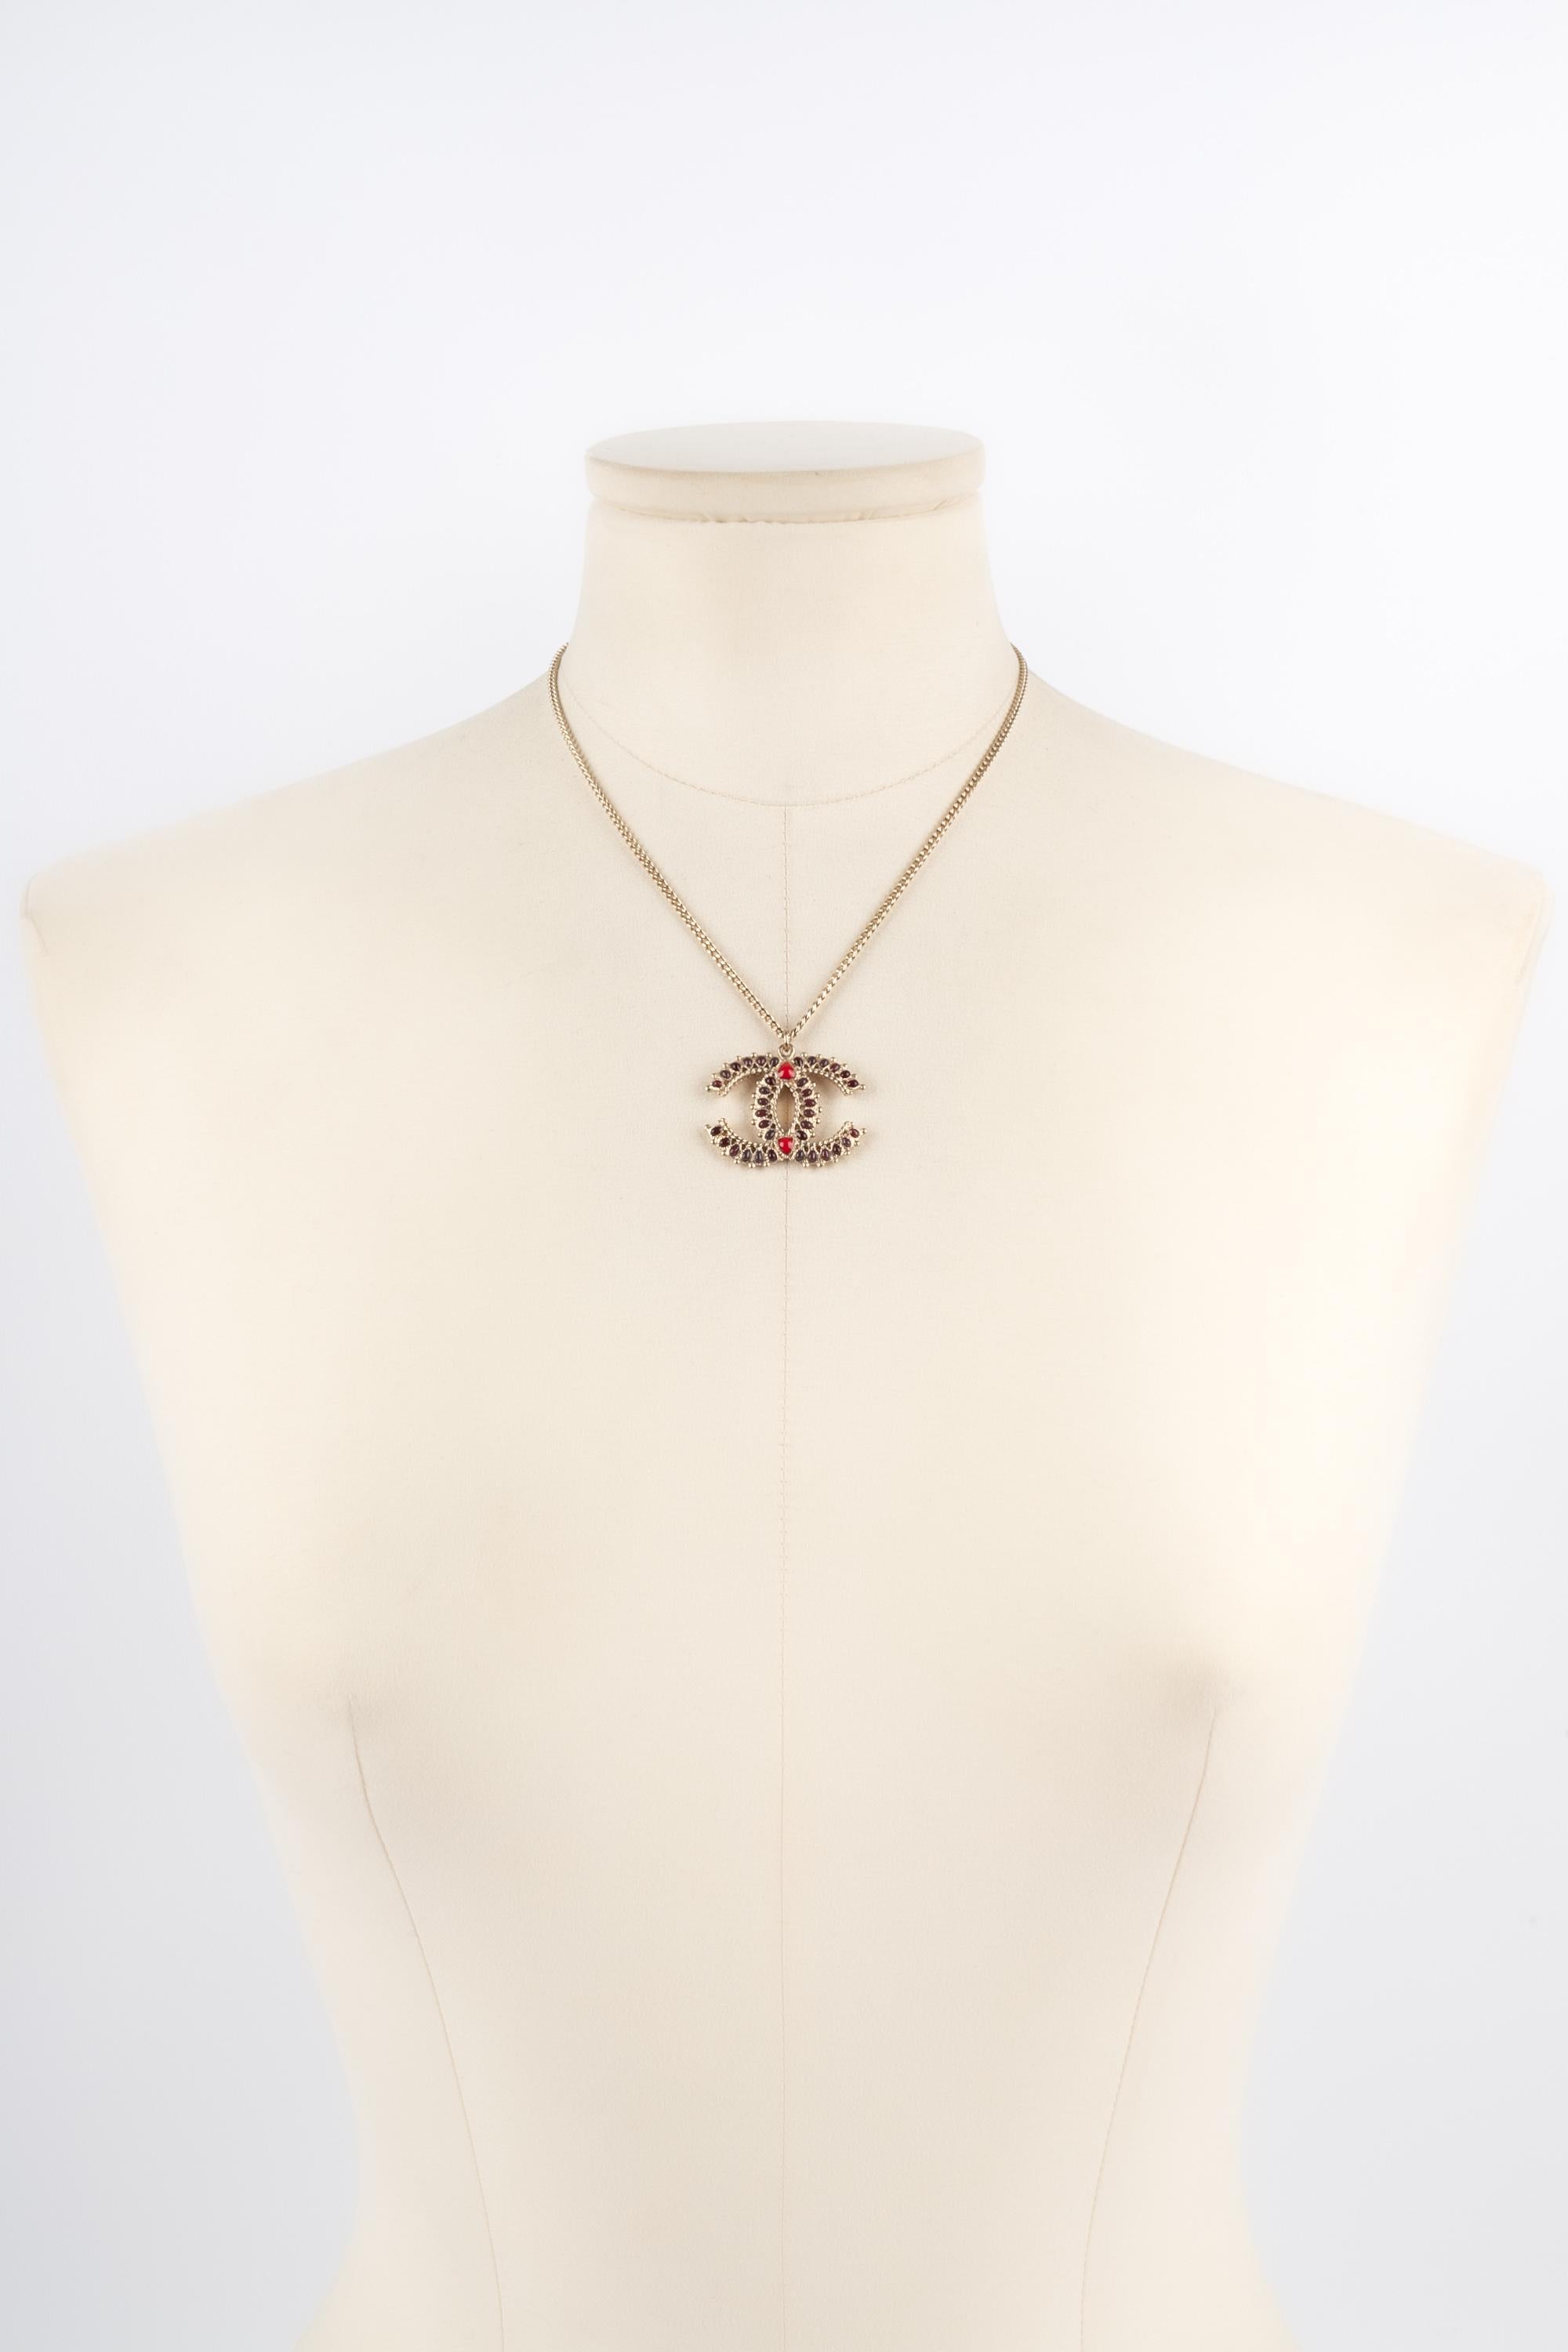 Chanel cc necklace 2014 2